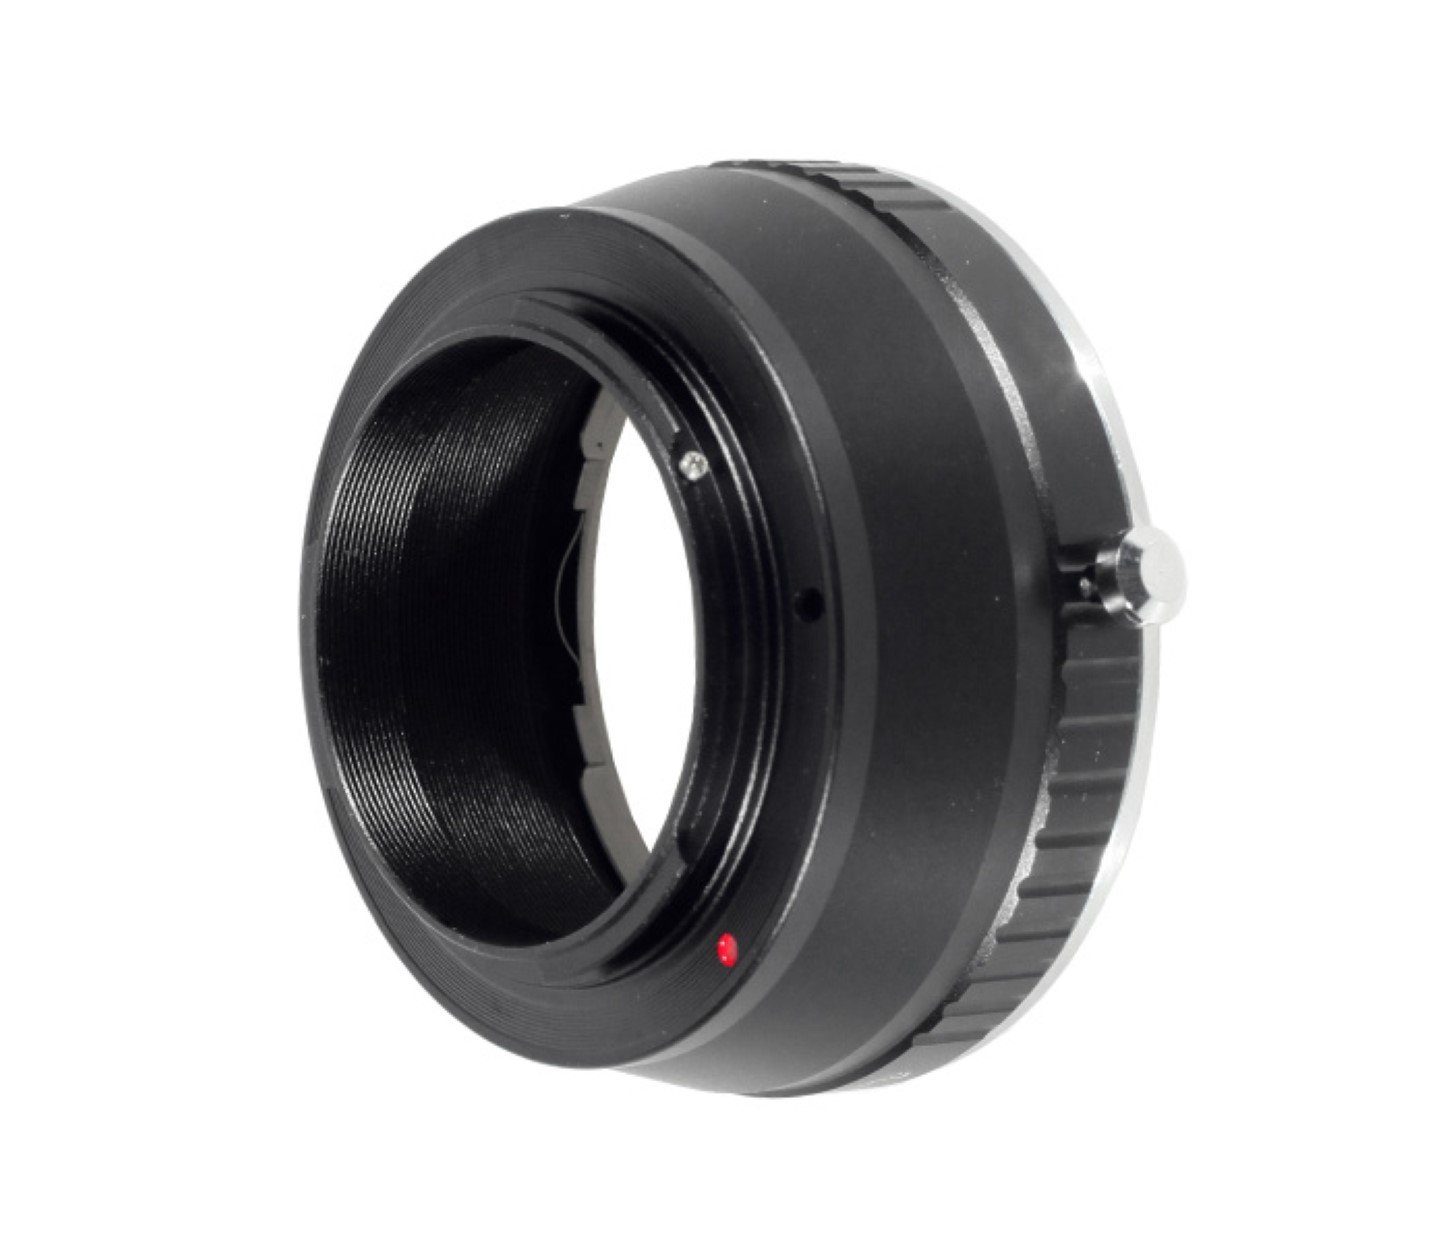 ayex Adapter für Canon EOS EF-S Linse an Canon EOS M Kamera Objektiveadapter